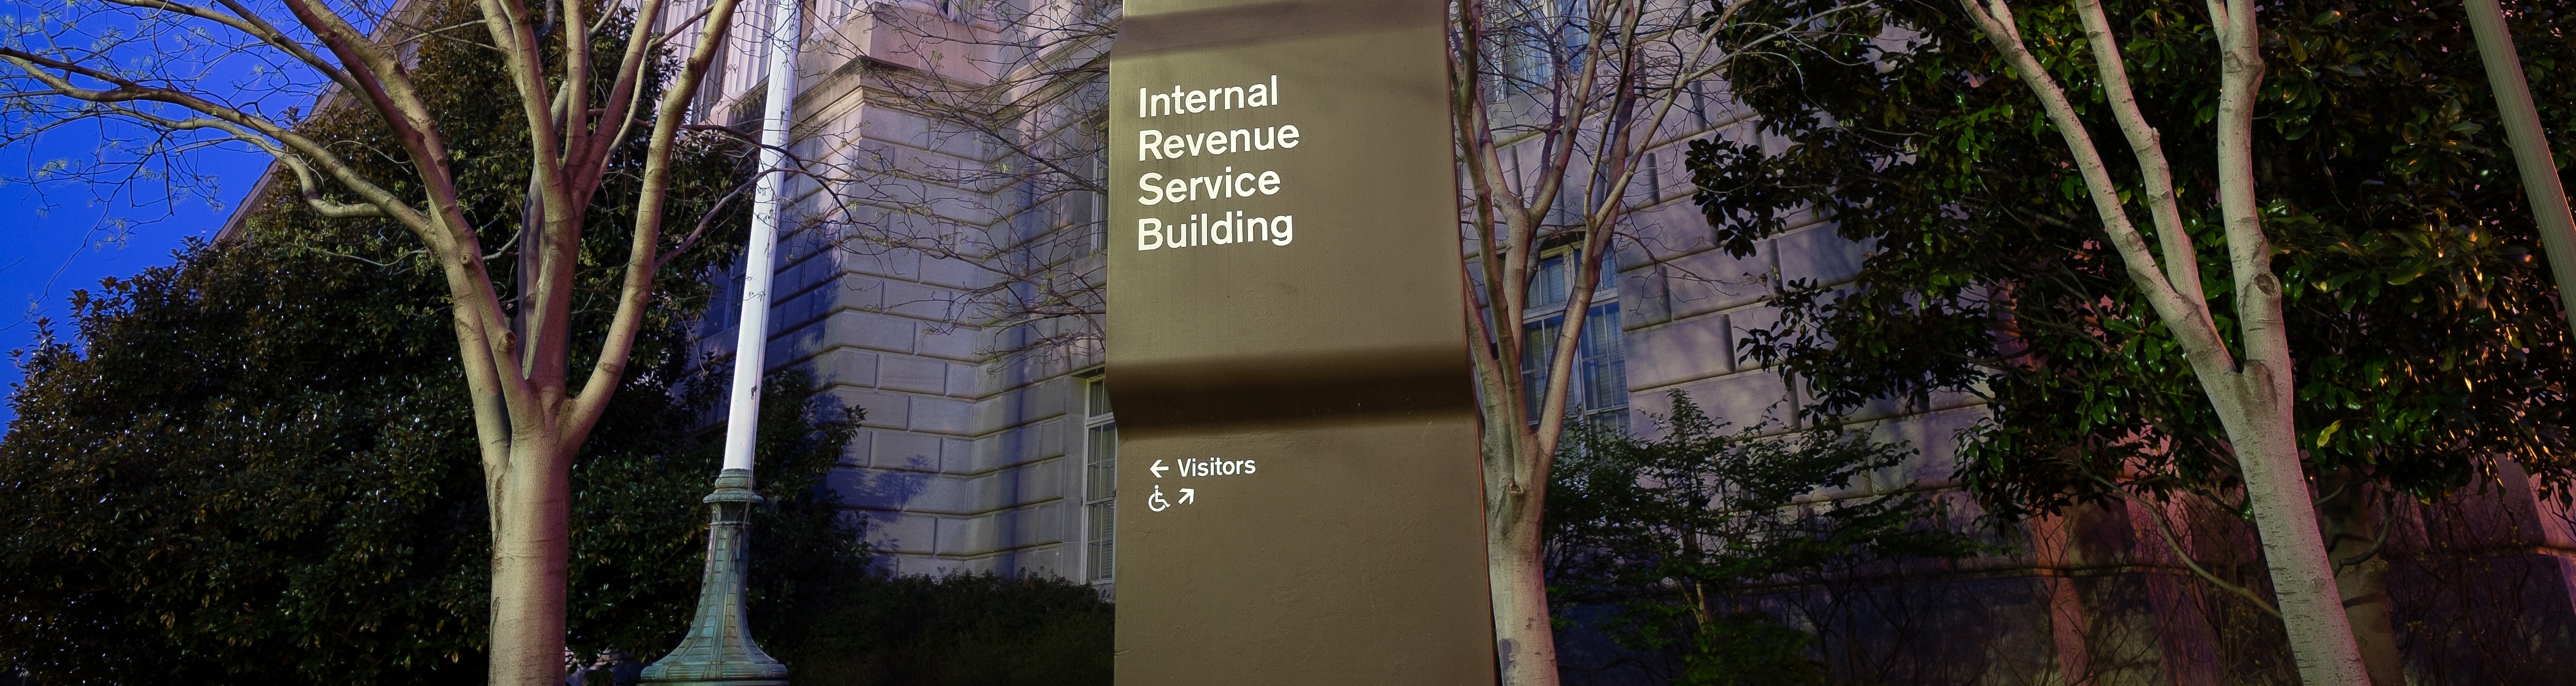 IRS_audit